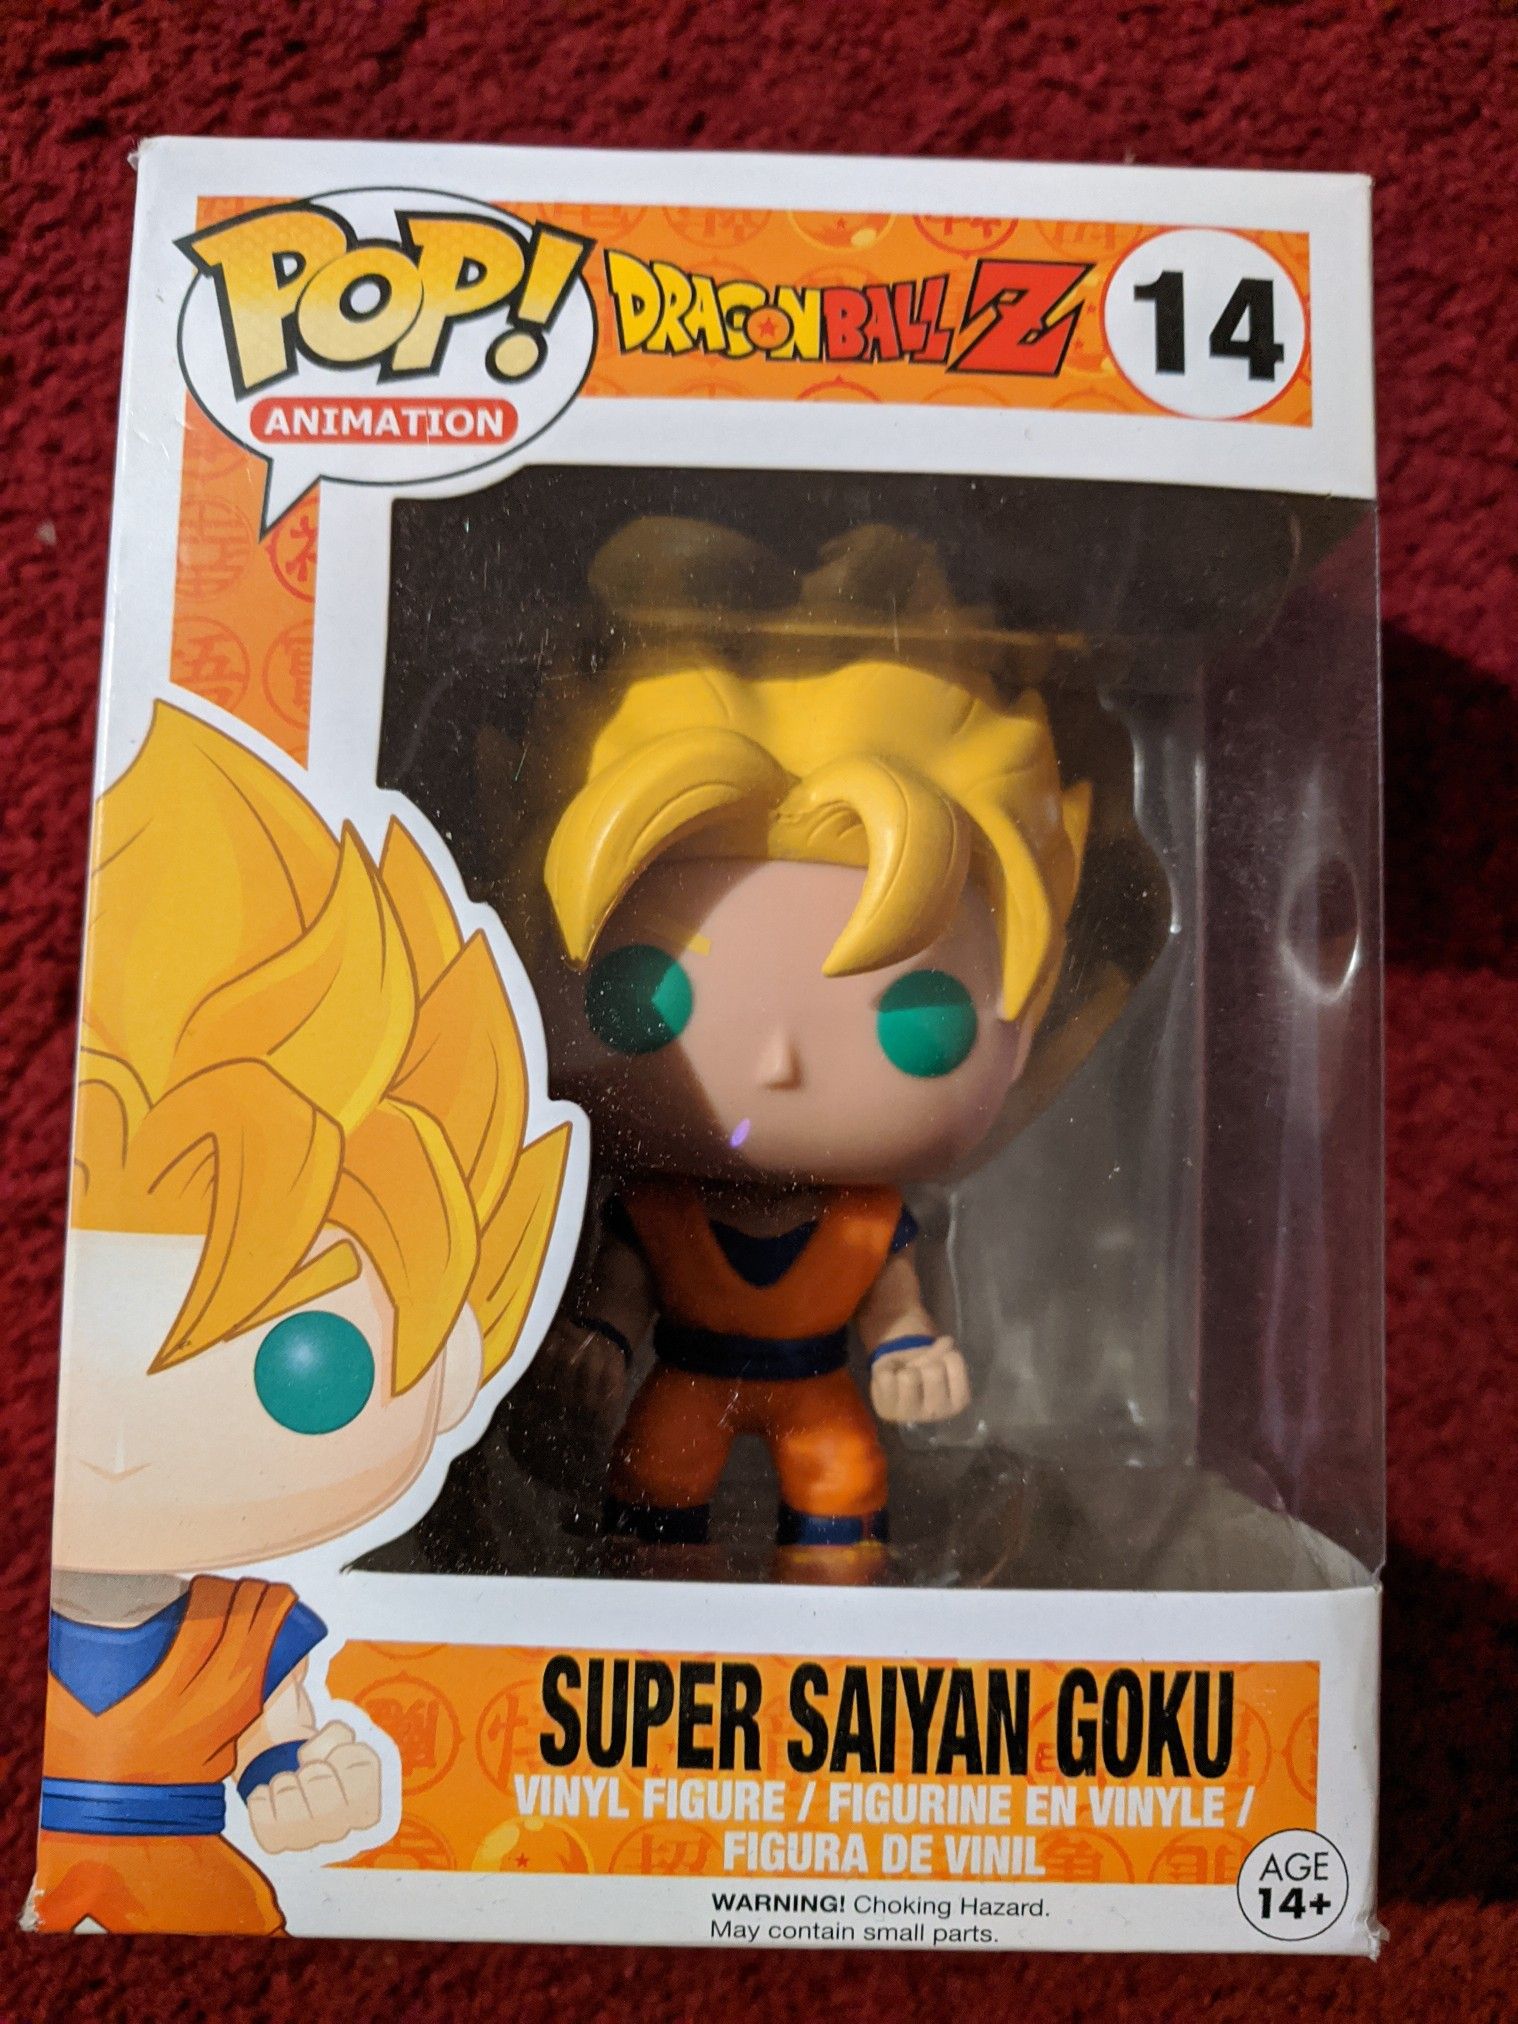 Super Saiyan Goku Pop 14